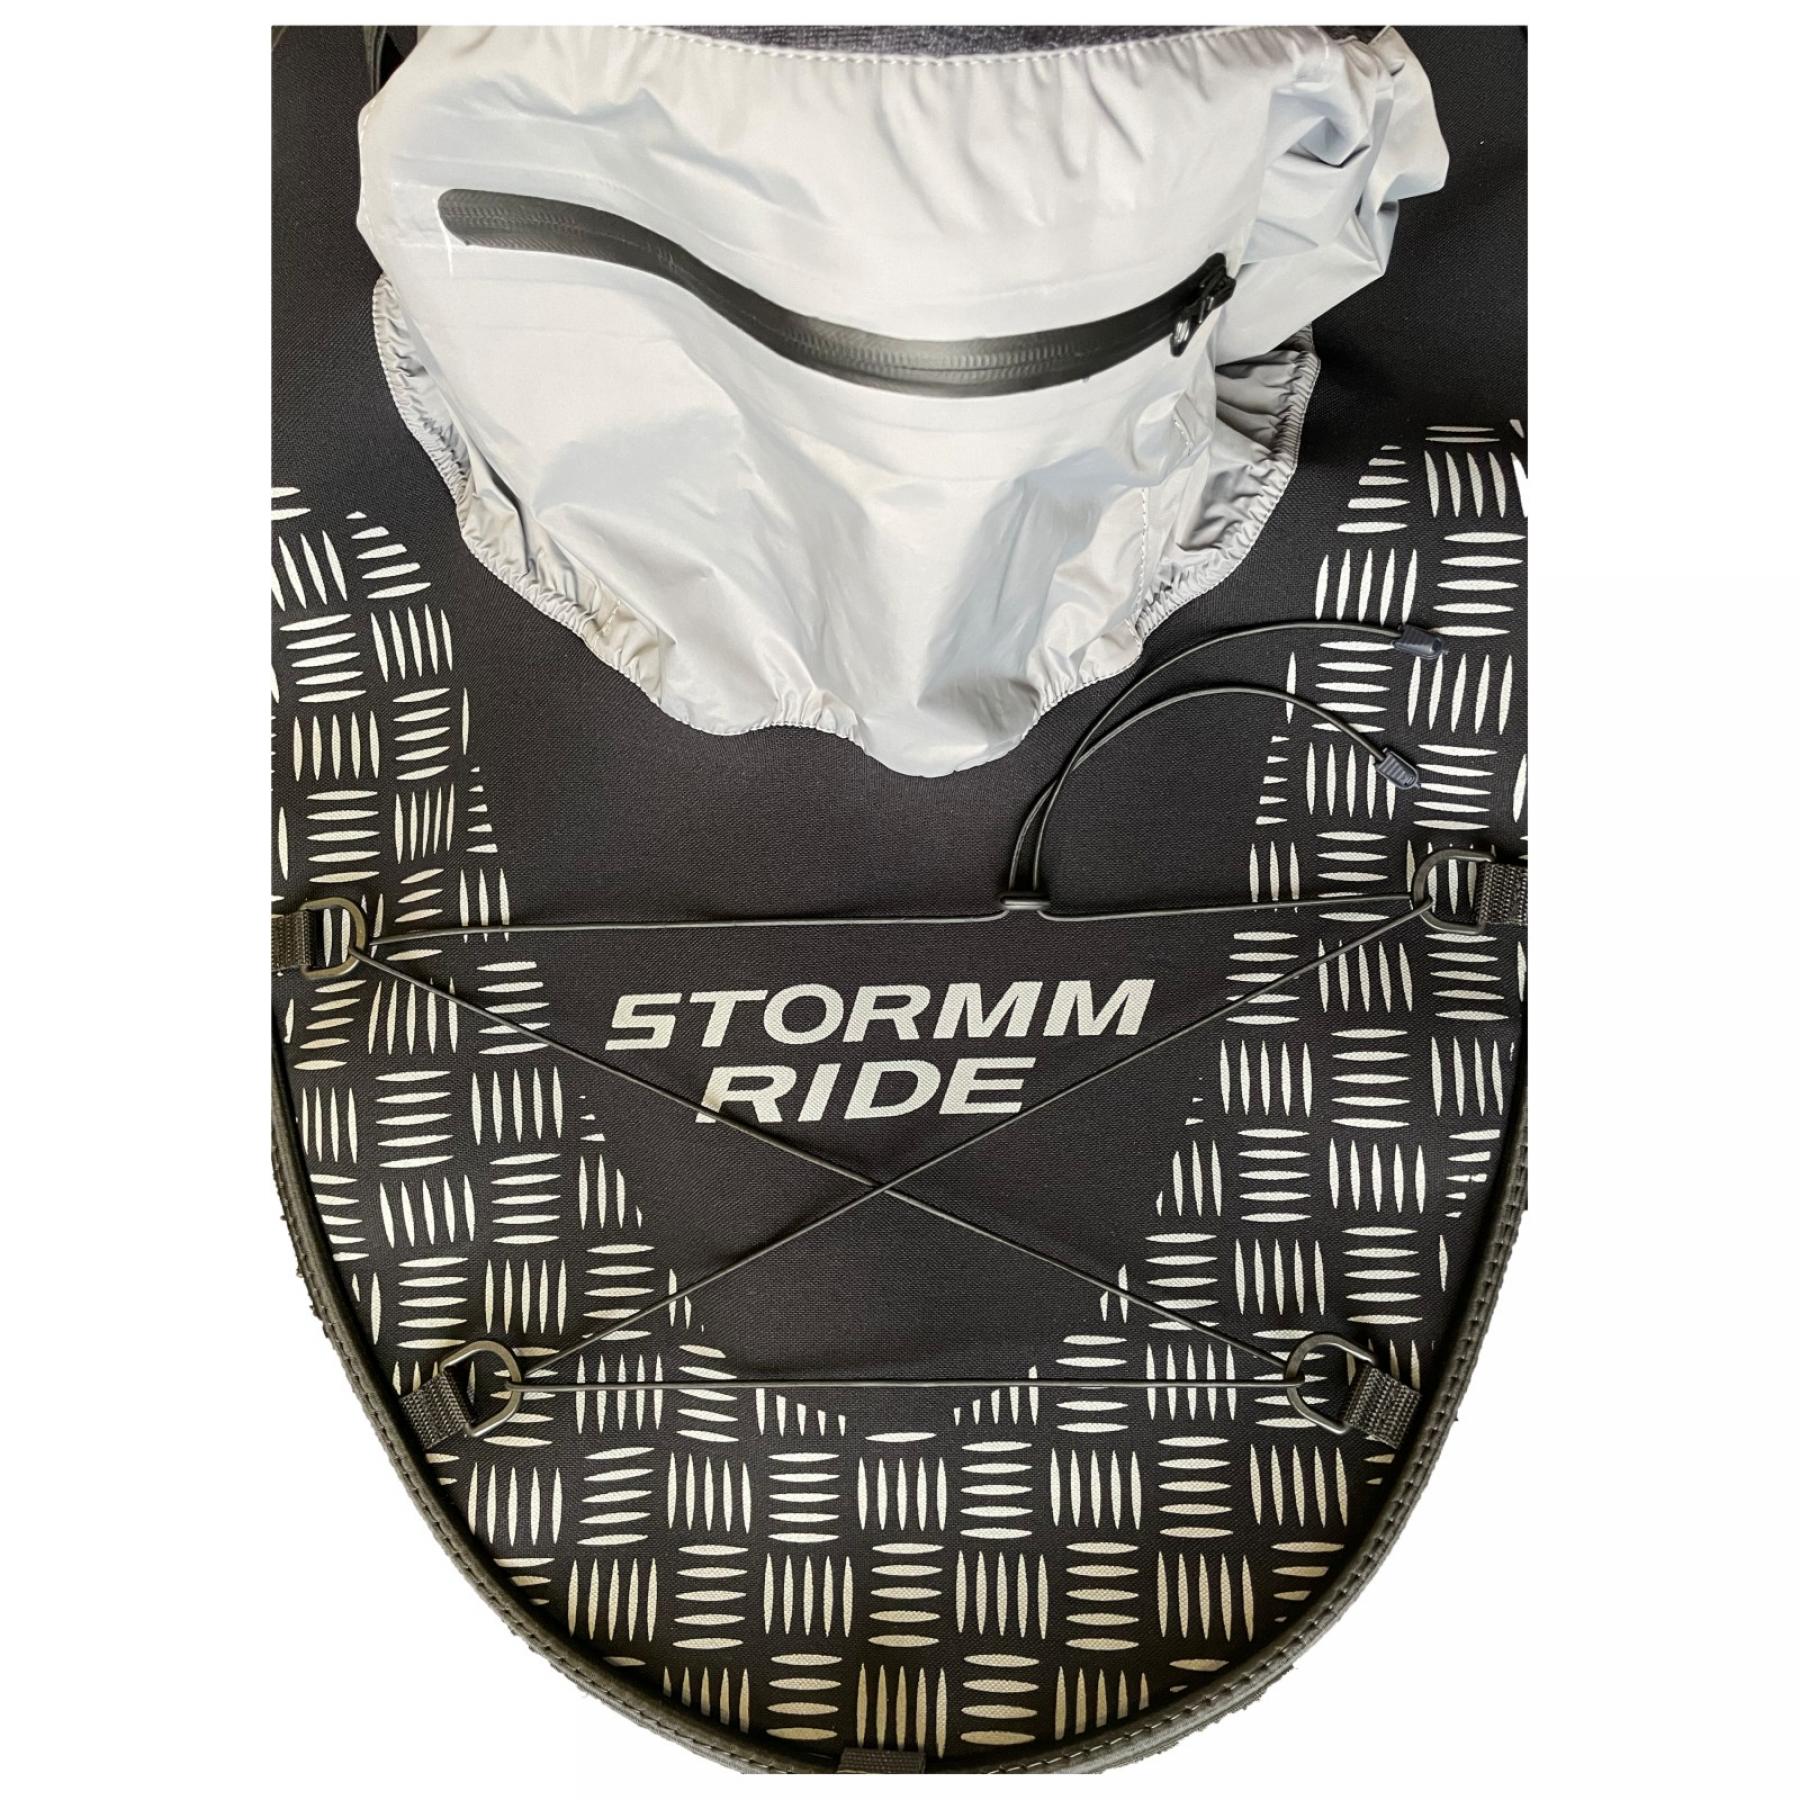 Stormm Ride Spritzdecke Gran Turismo